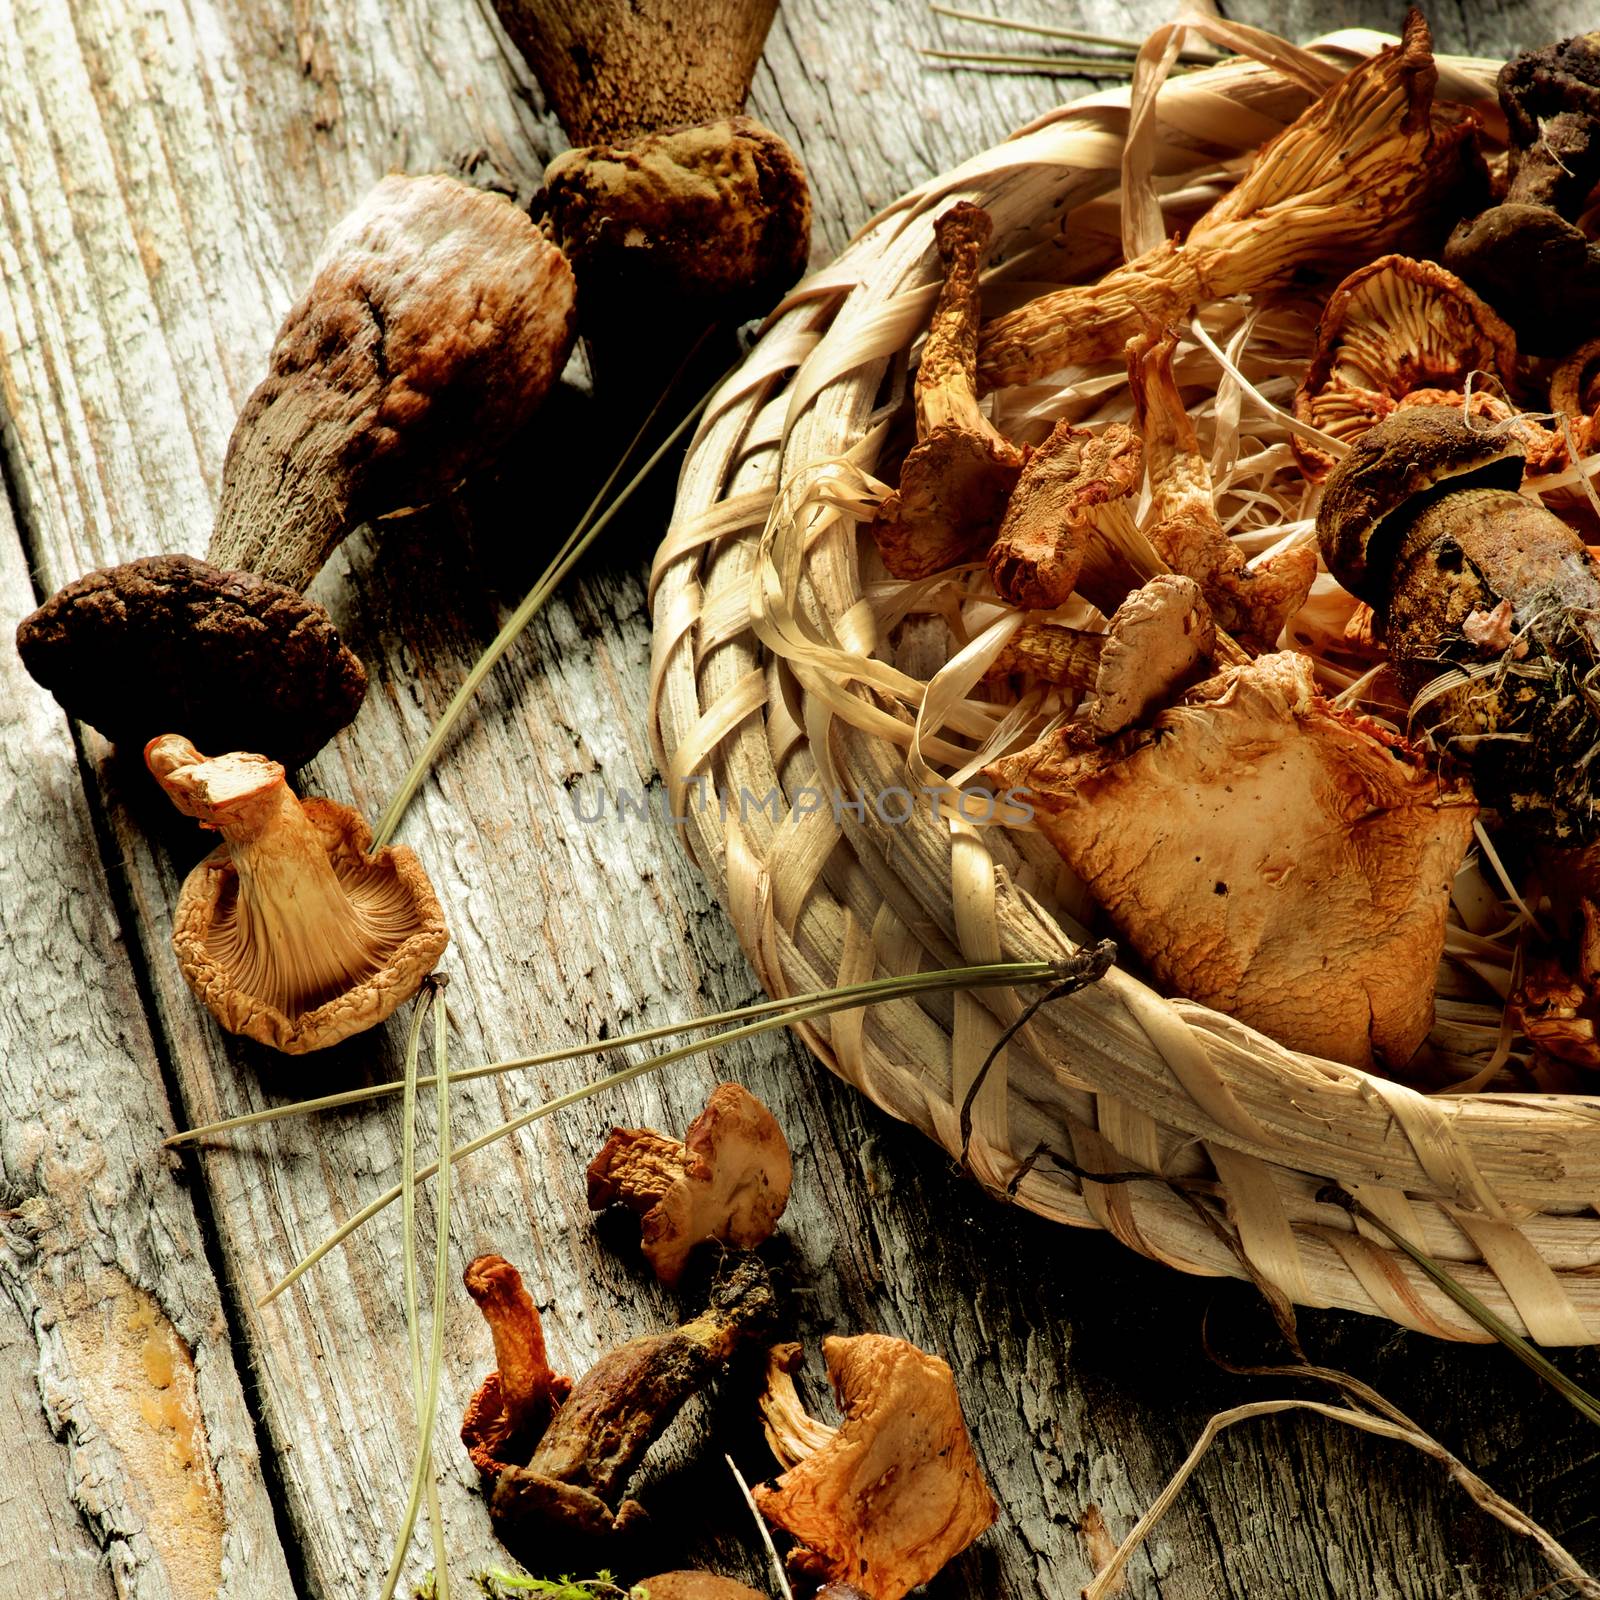 Arrangement of Dried Mushrooms by zhekos